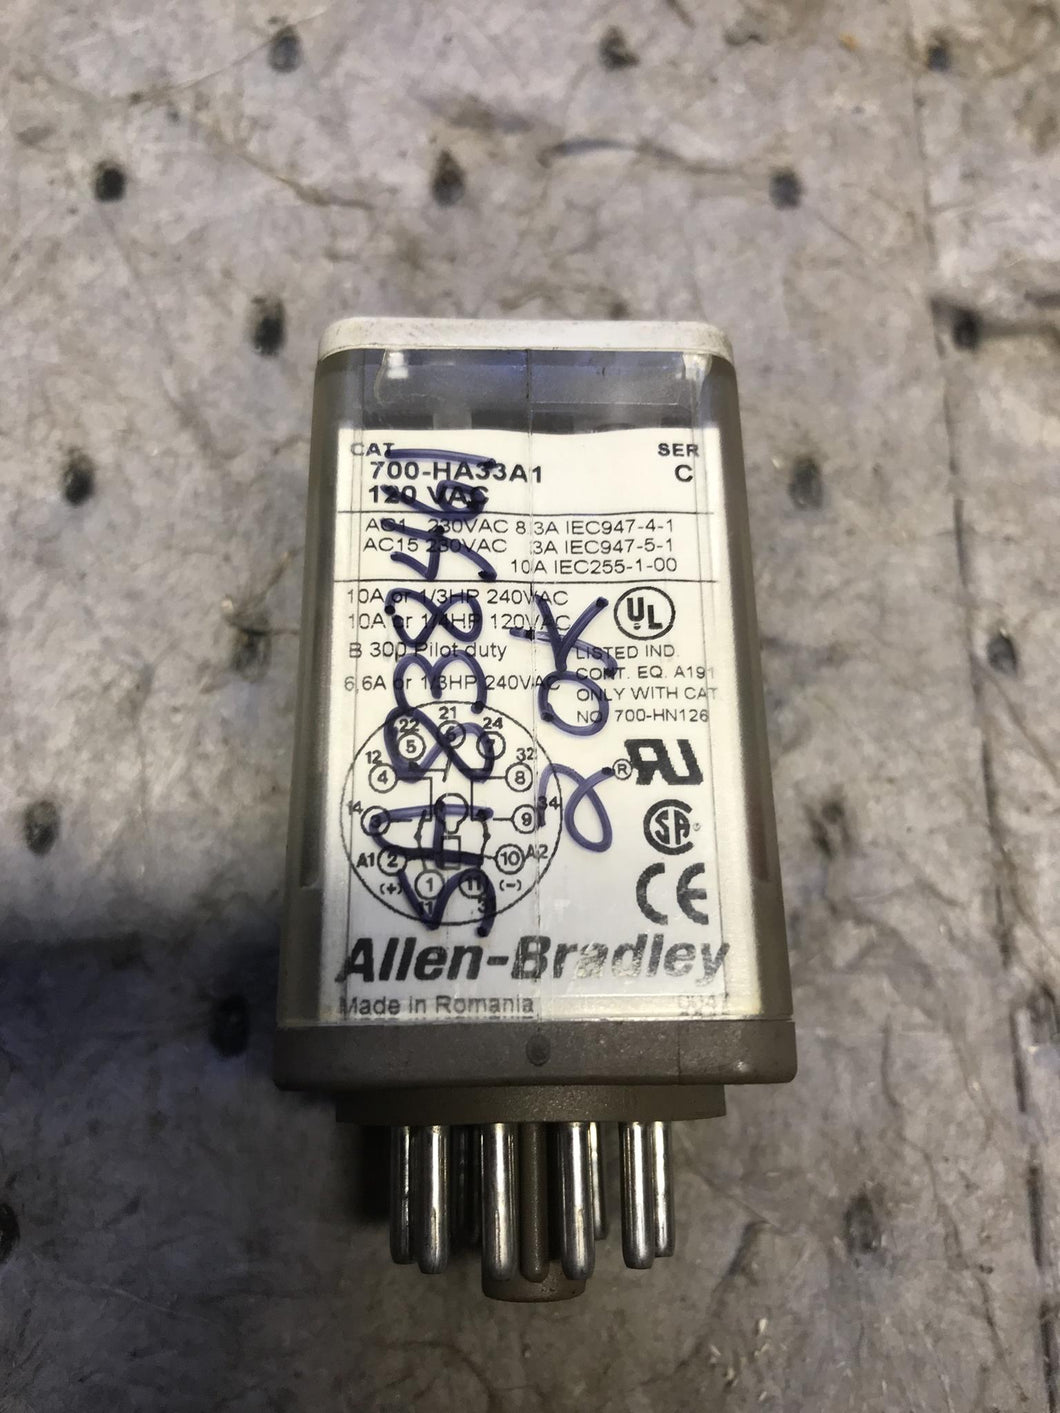 Allen Bradley 700-HA33A1 Relay